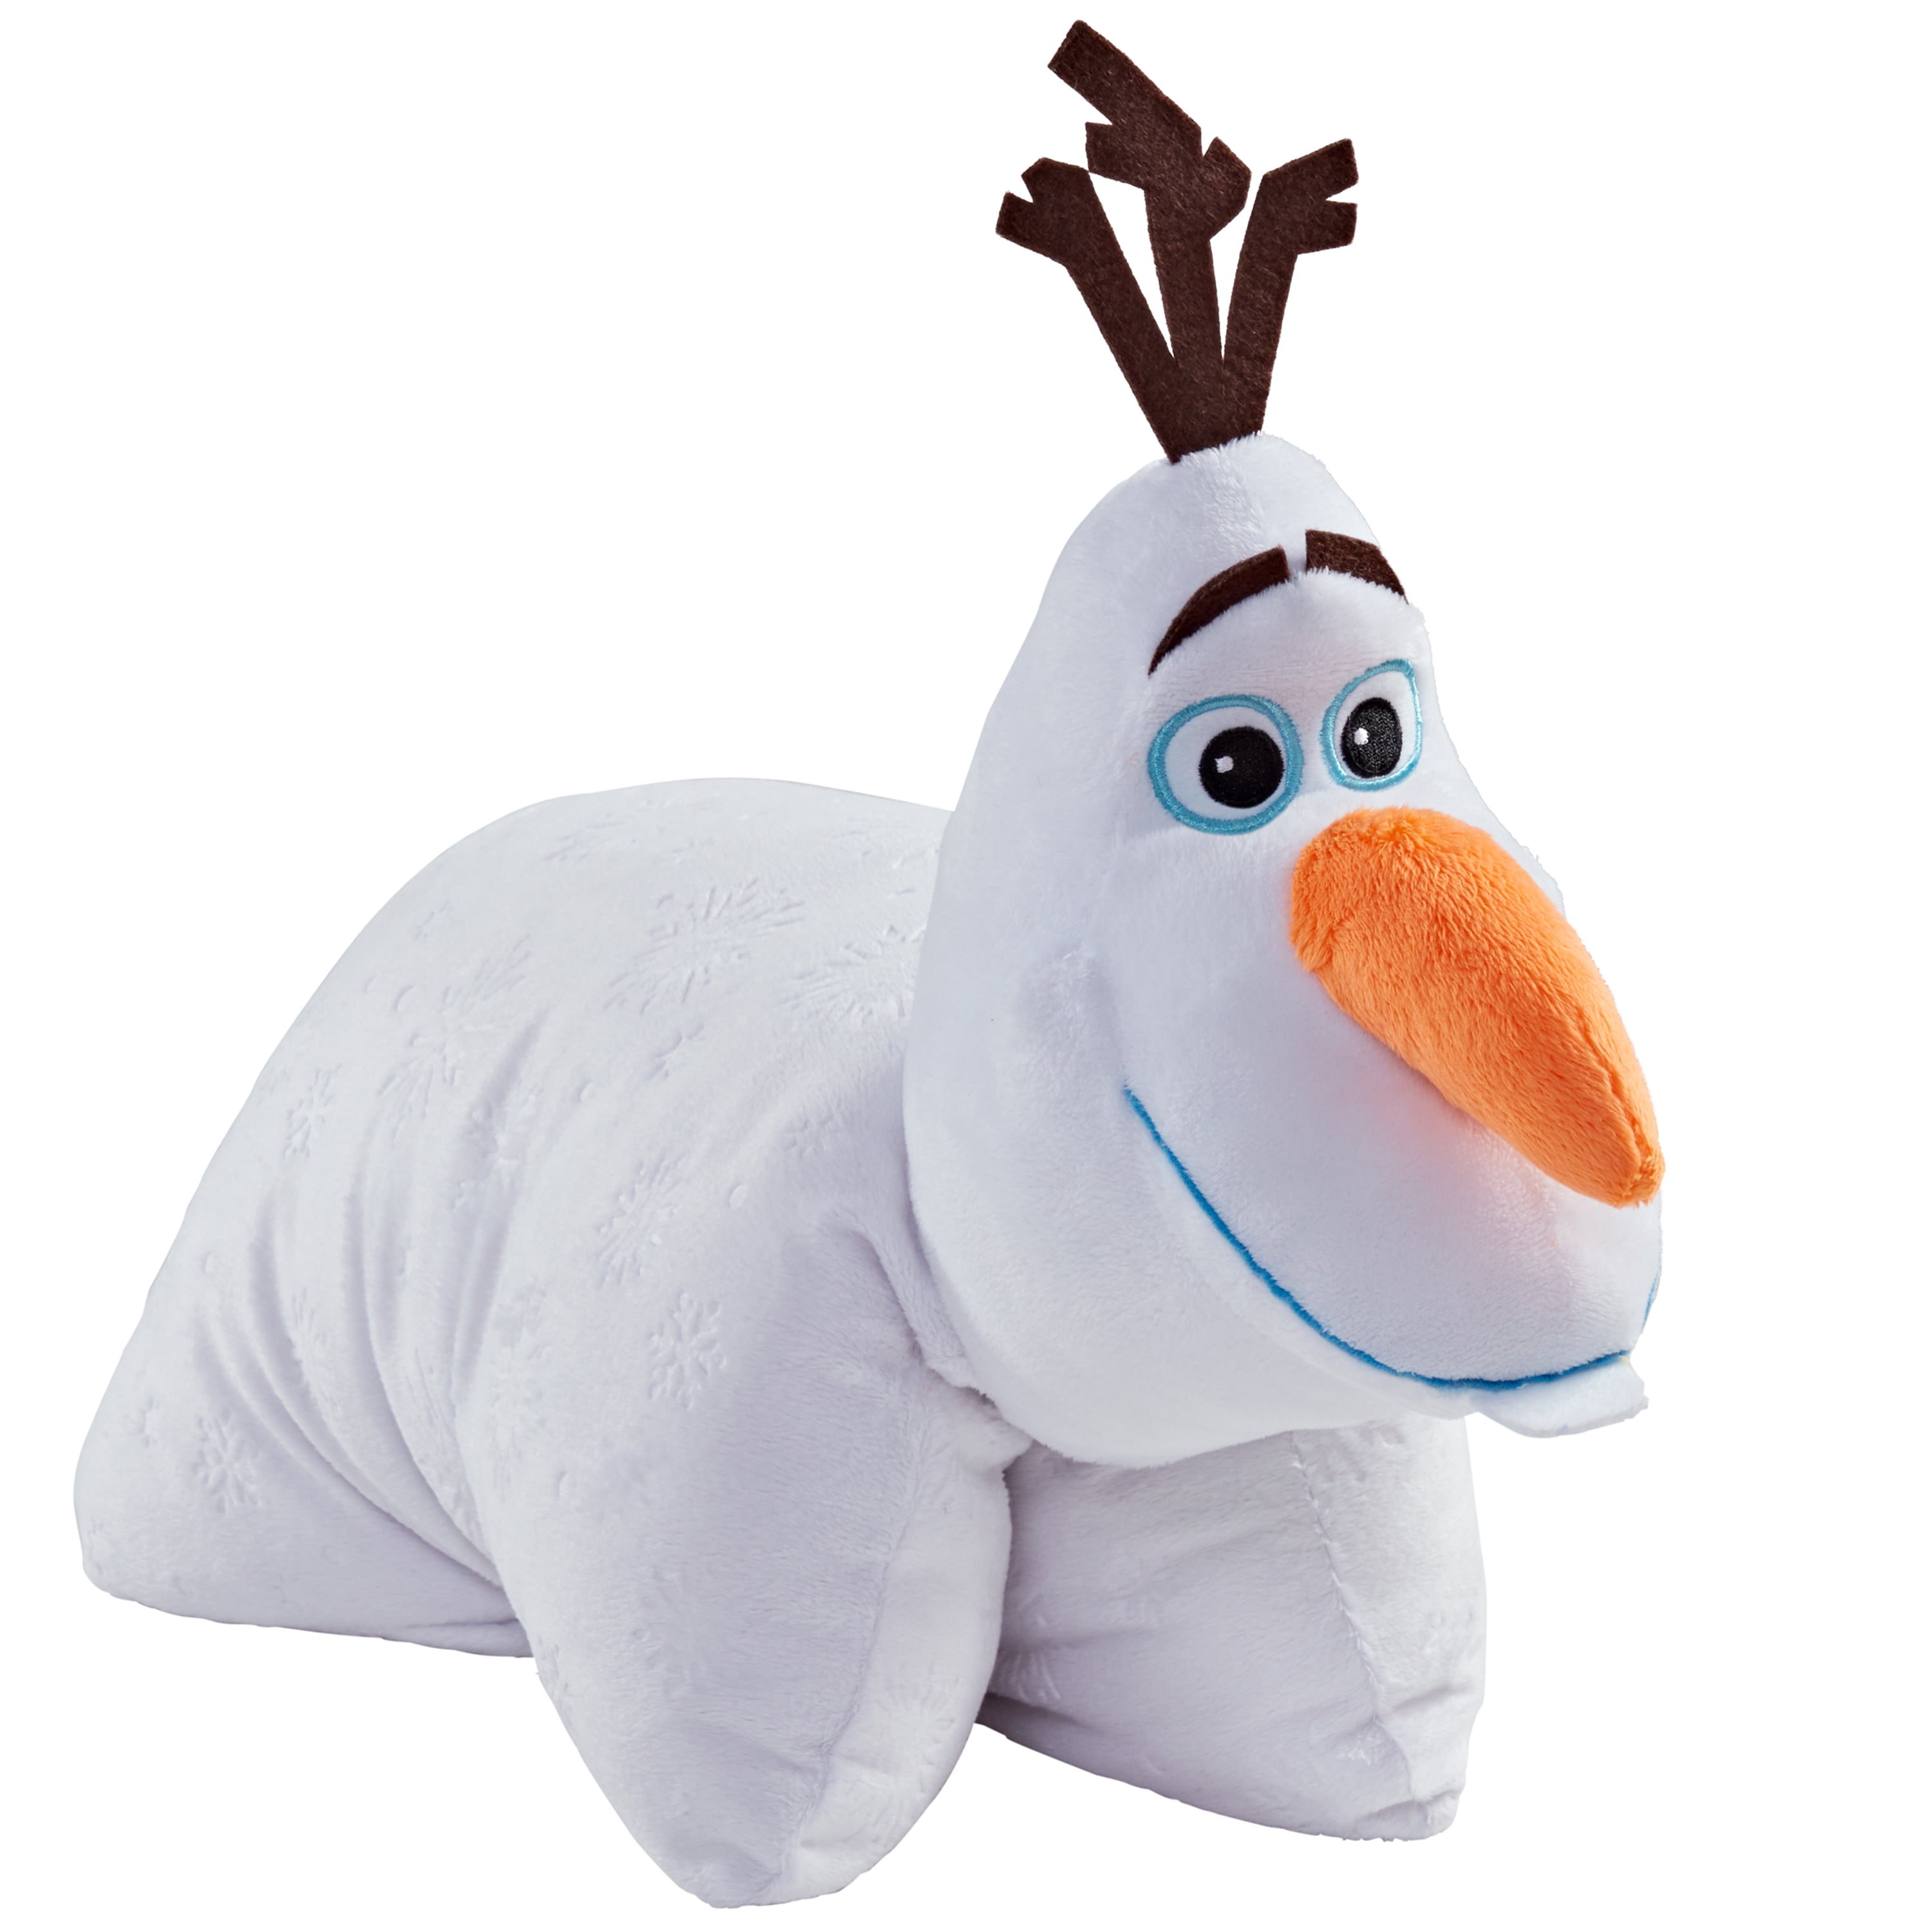 13" Disney Frozen Elsa's Friend Olaf Snowman Stuffed Animal Toy Doll Plush-Large 